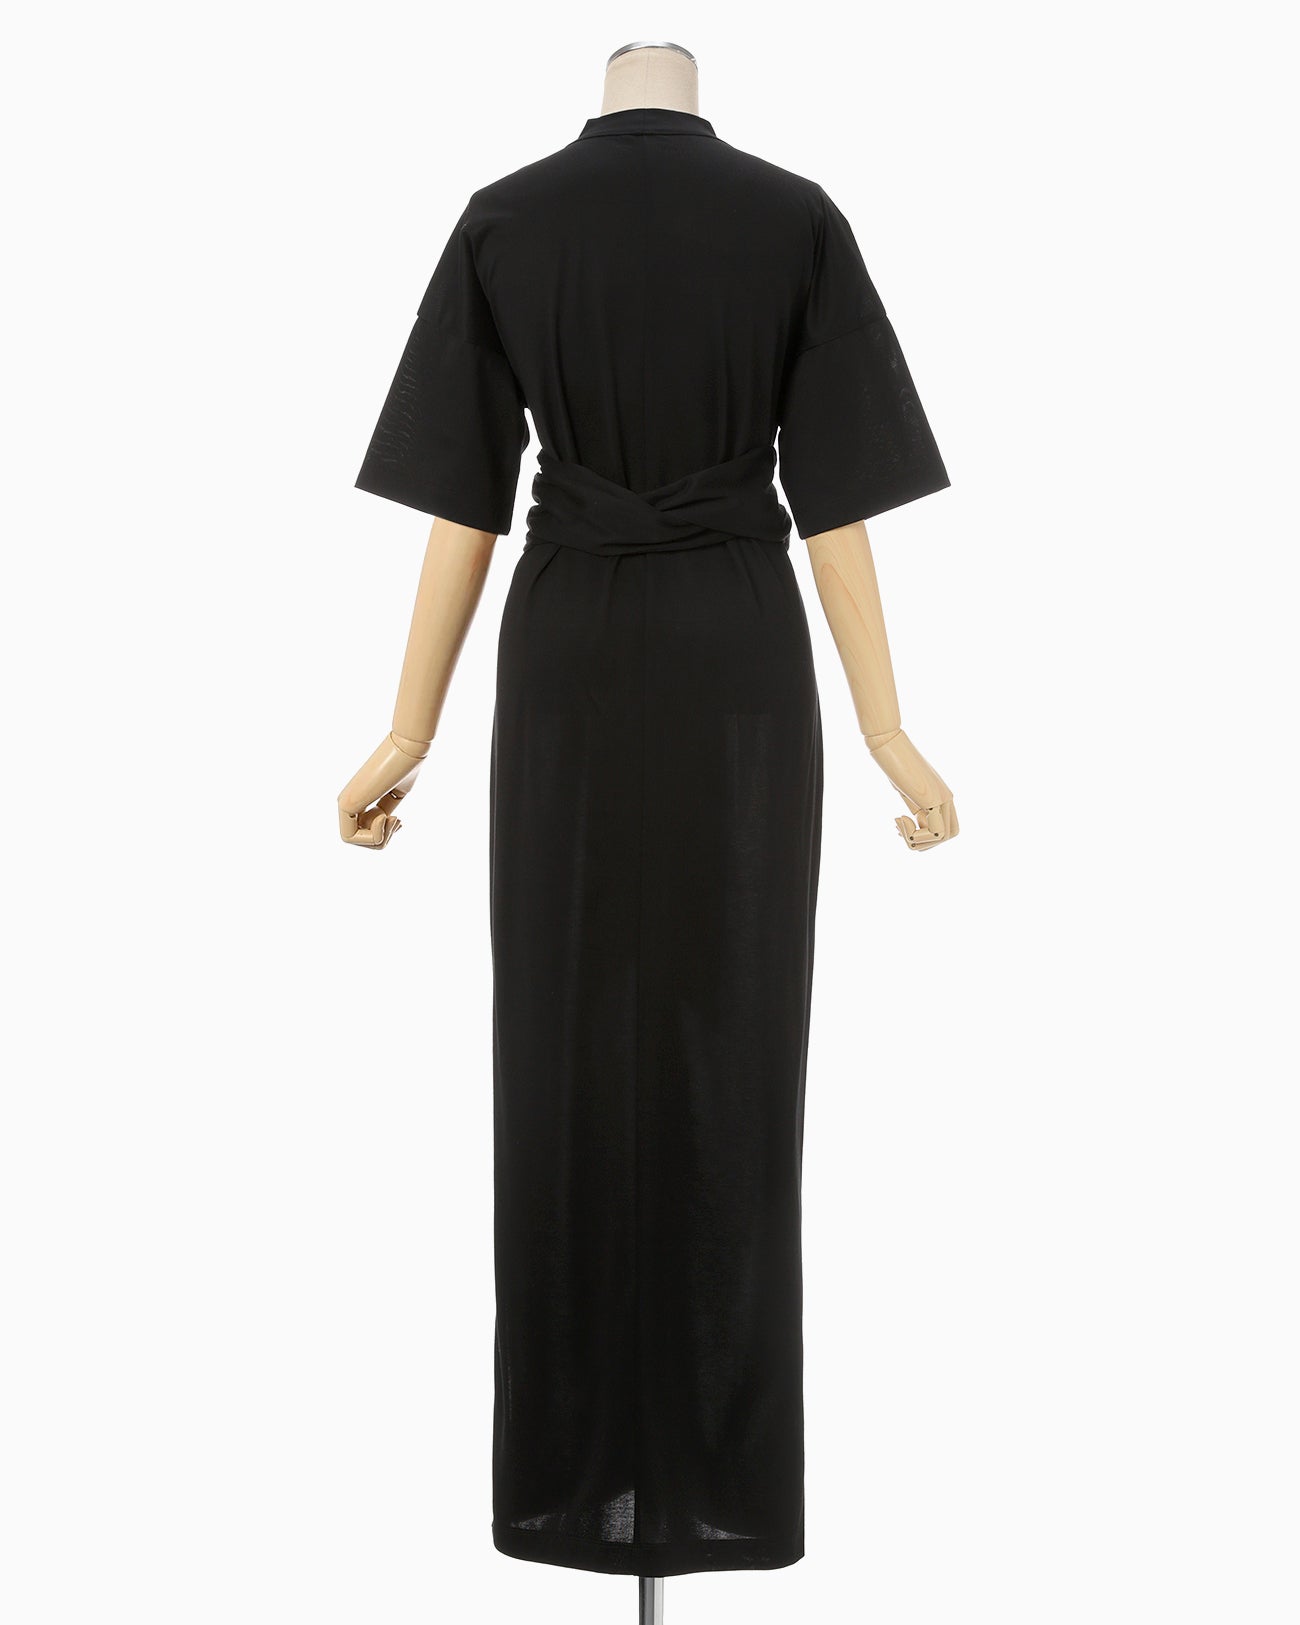 Suvin Cotton Jersey Dress - black